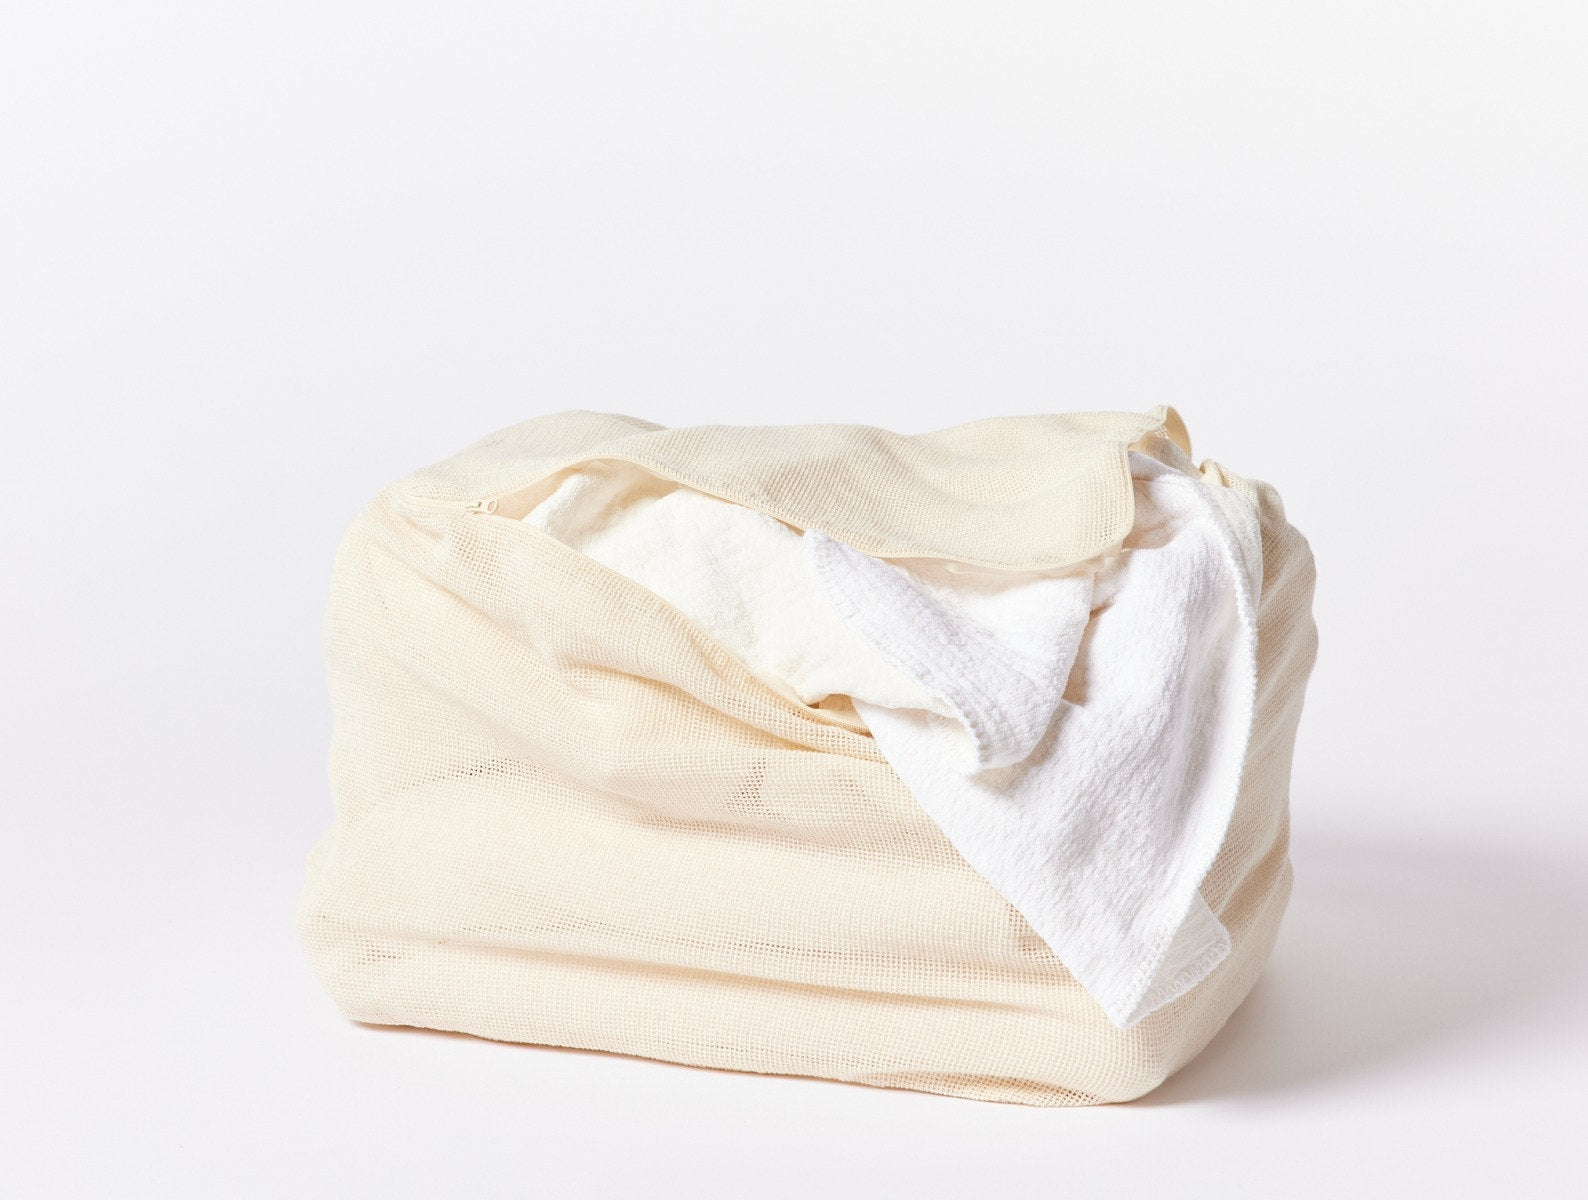 Organic Mesh Laundry Bag: Small or Large